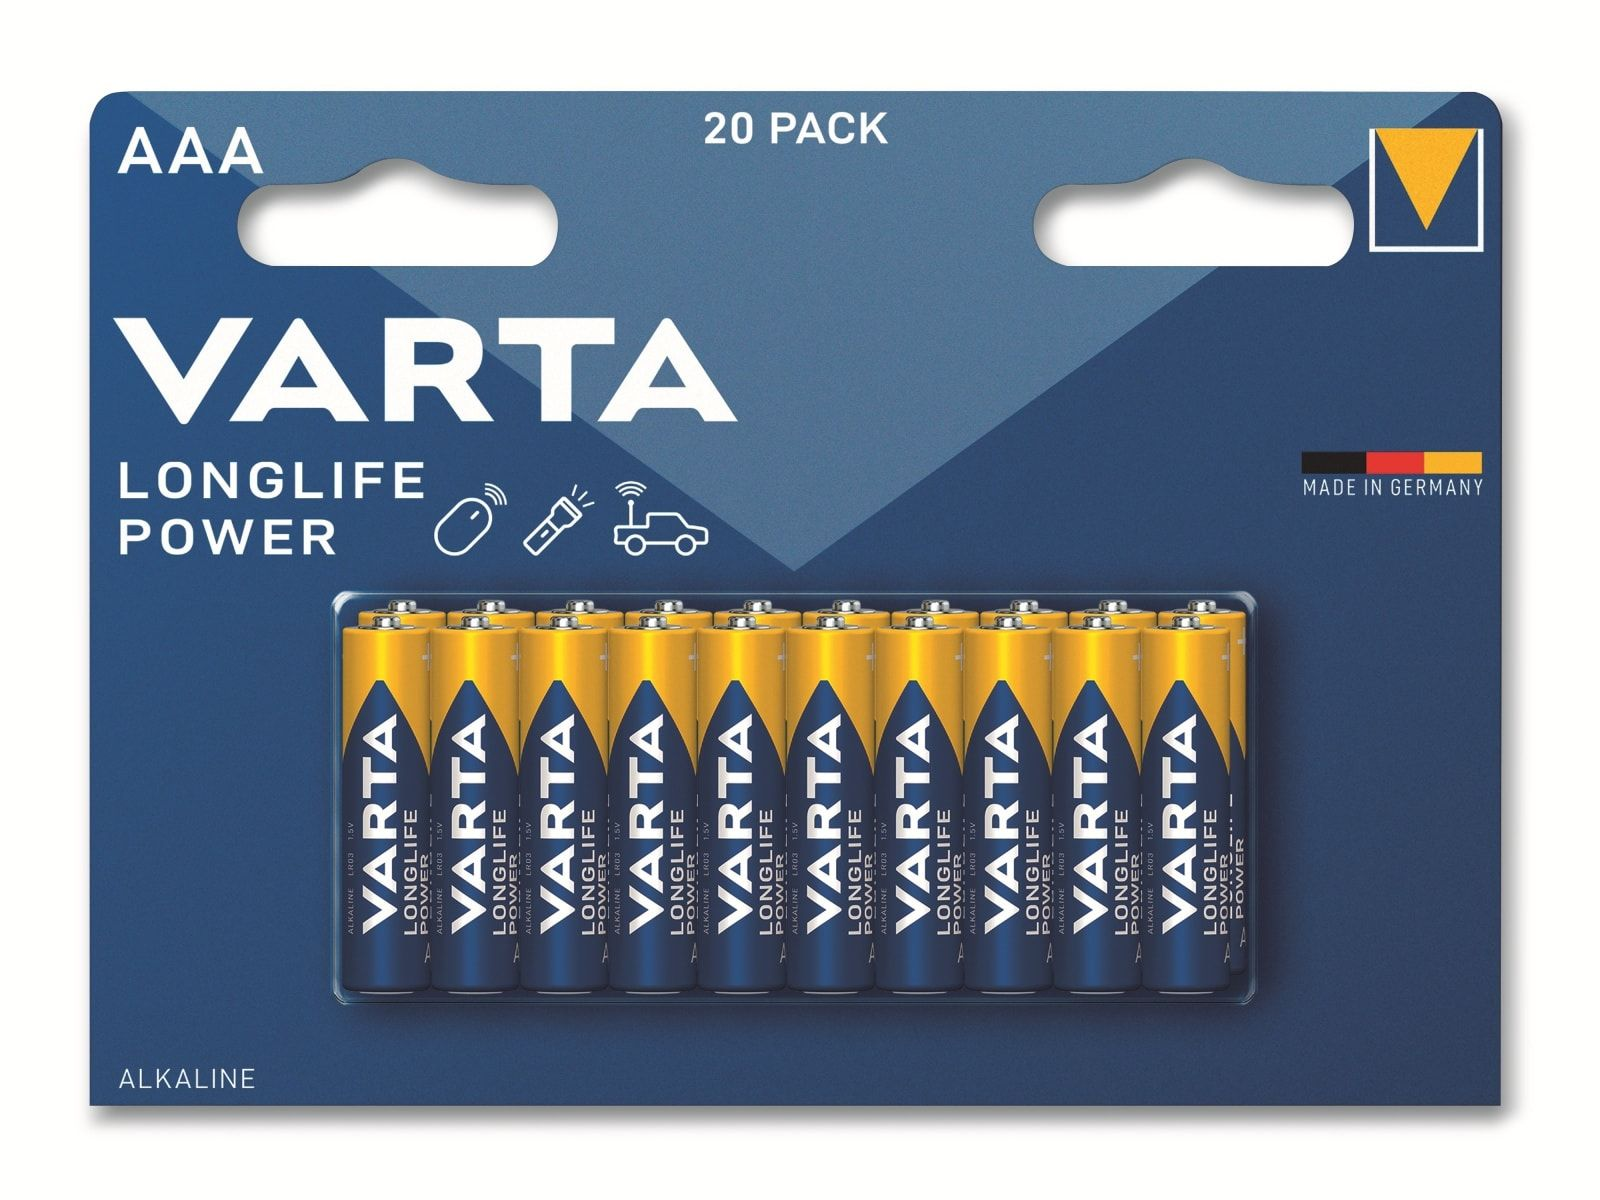 VARTA Batterie Alkaline, Alkaline Micro, 1.5V, 20 Stück LR03, AAA, Longlife Power, Batterien